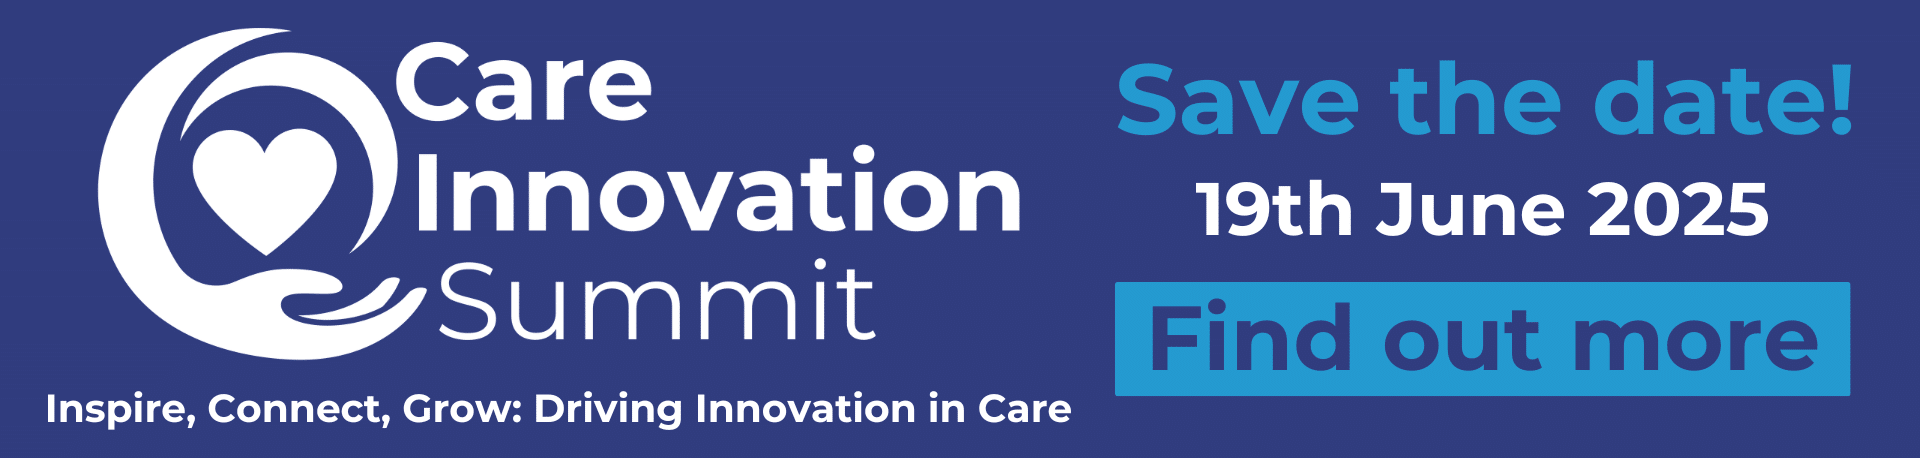 Care Innovation Summit